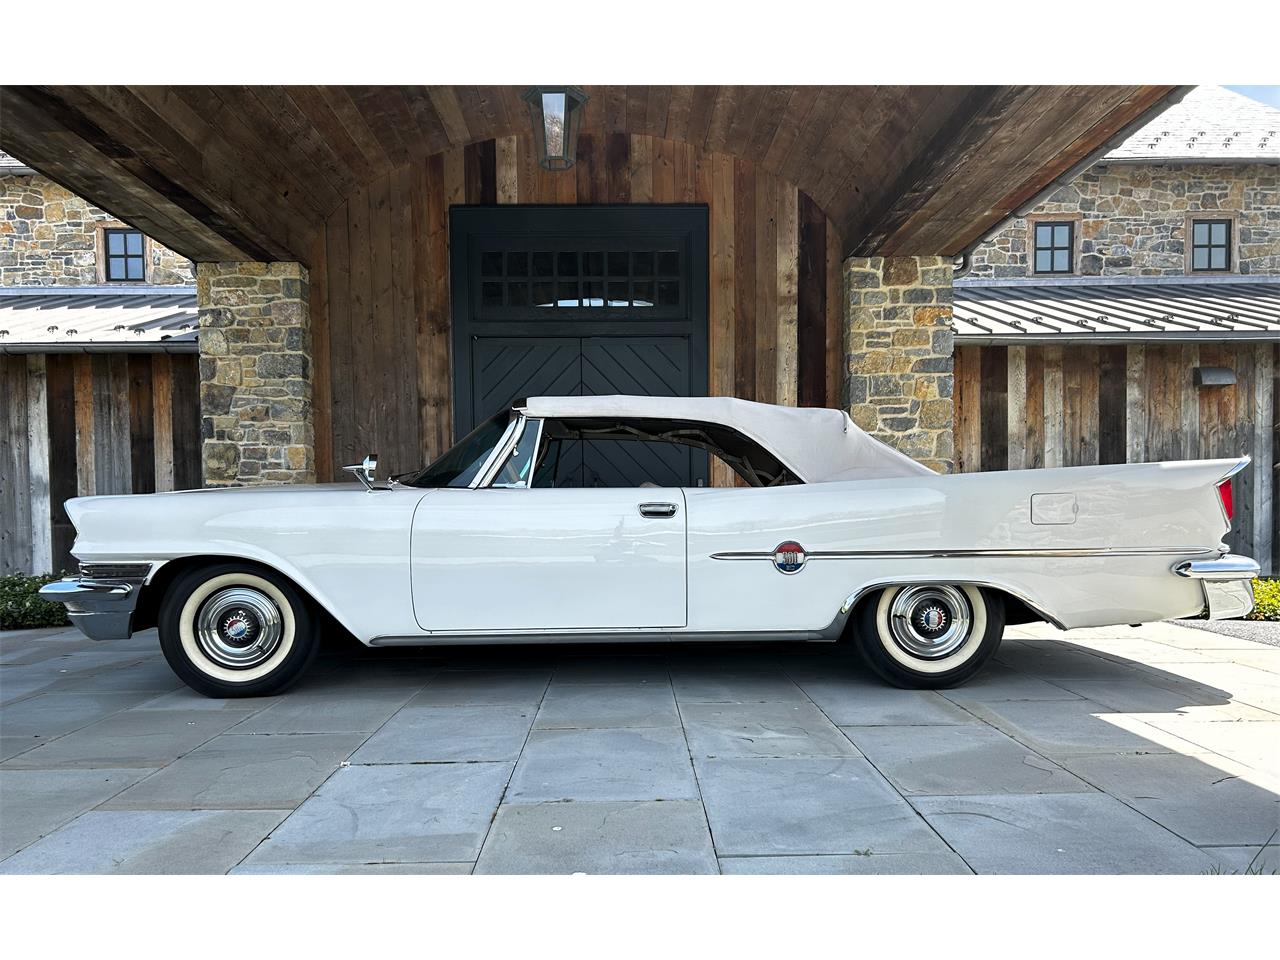 1959 Chrysler 300 in Allentown, Pennsylvania